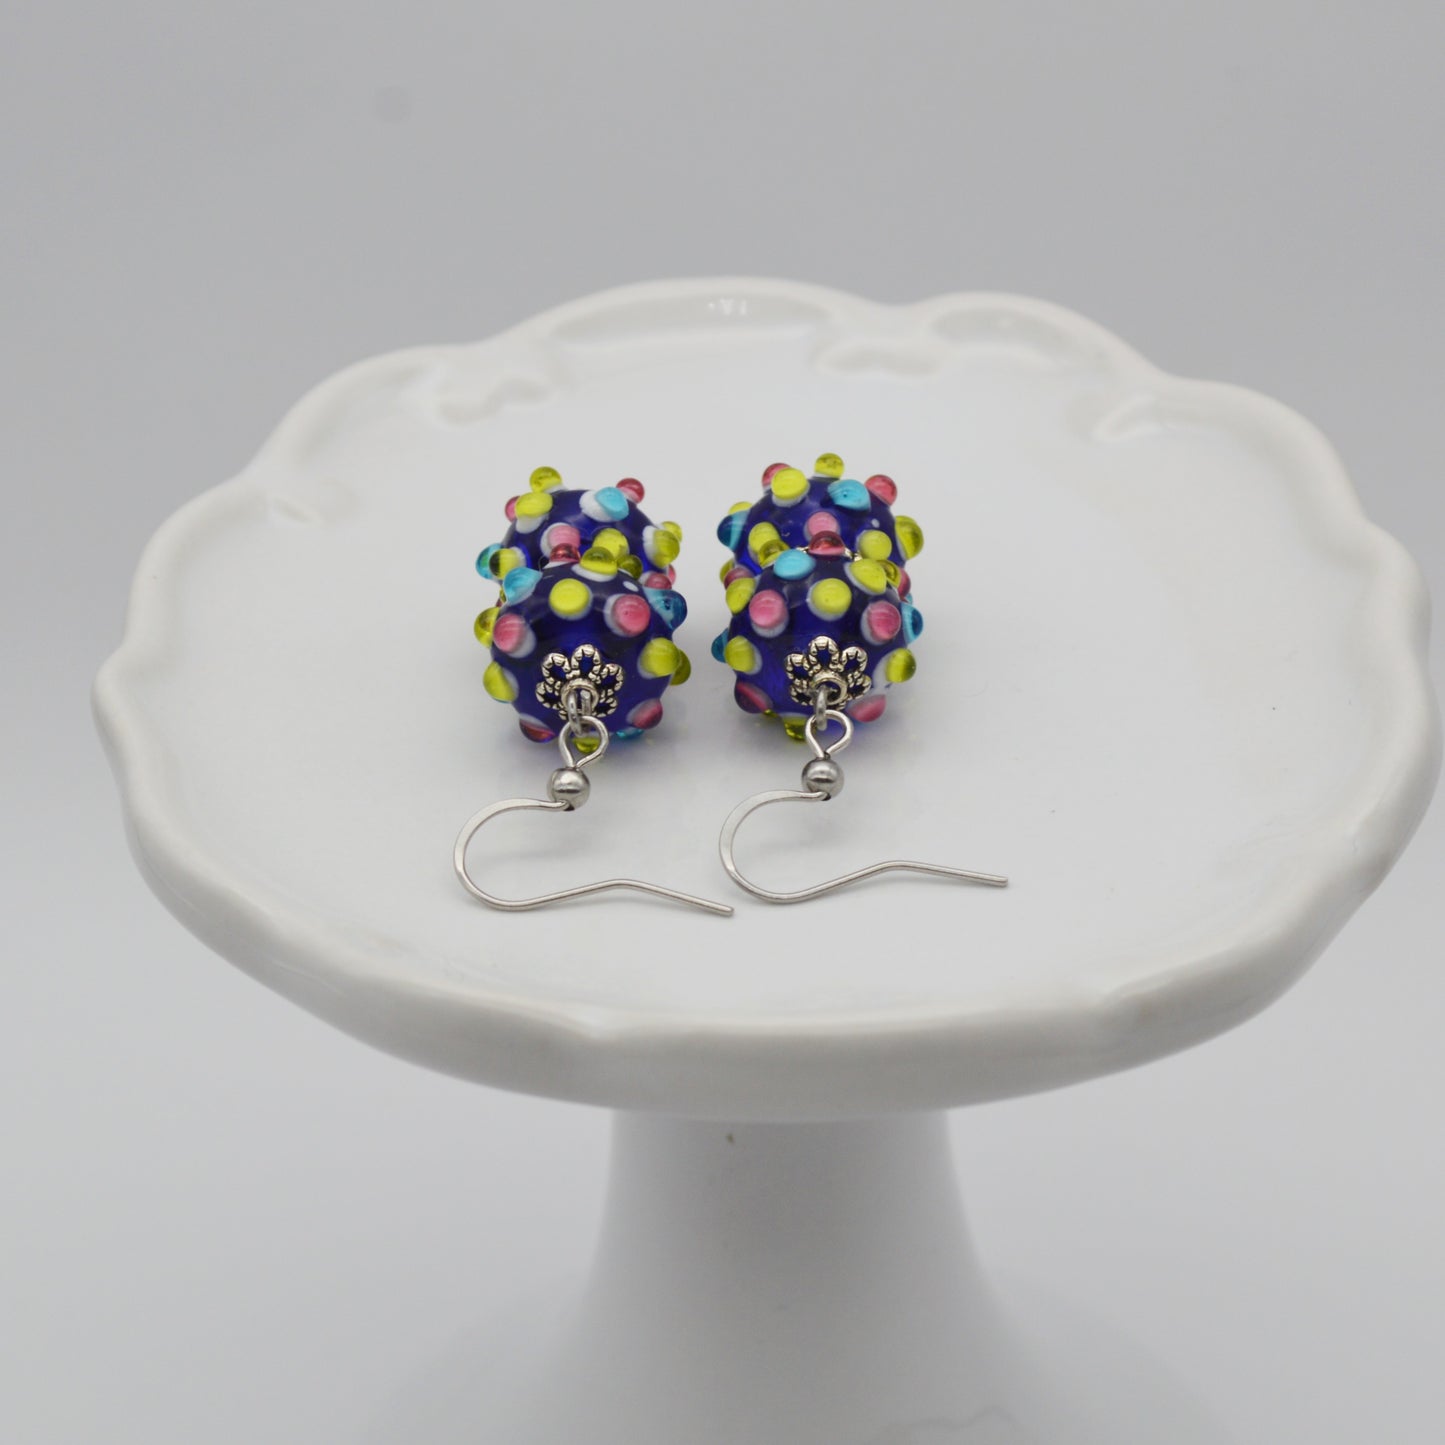 Colorful Bumpy Murano Glass Lampwork Earrings - Beads Handmade in Venice, Italy